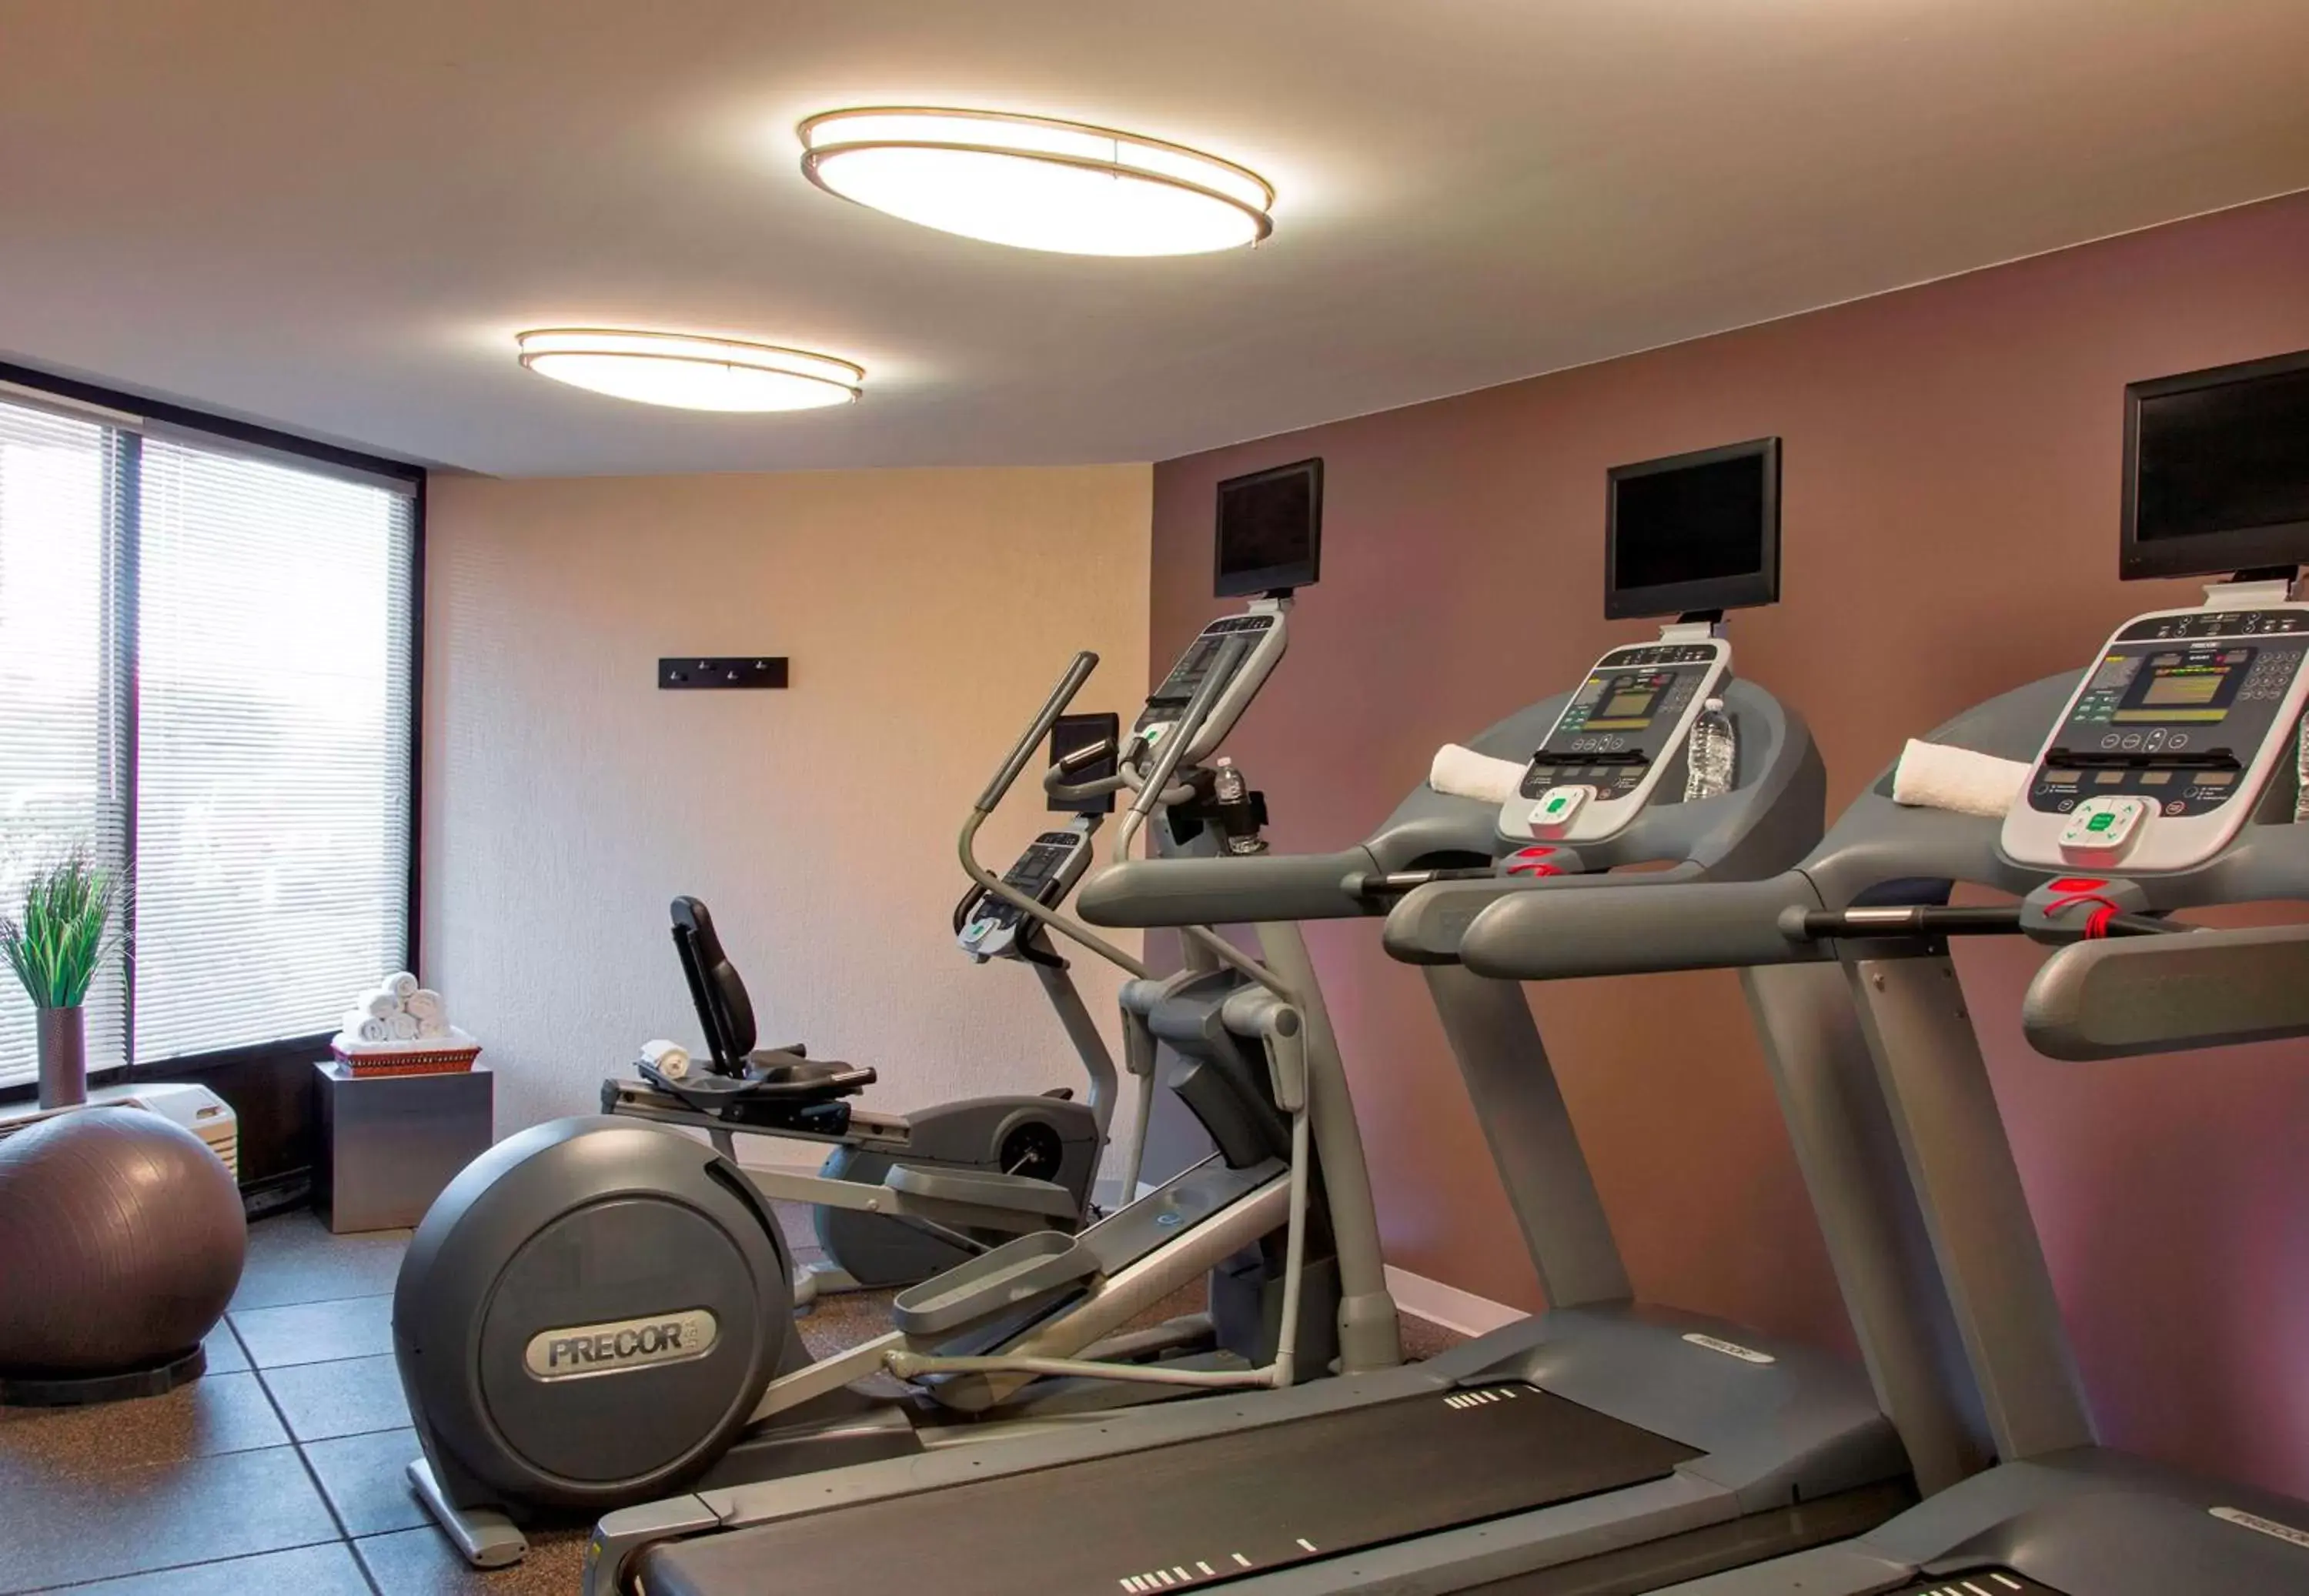 Fitness centre/facilities, Fitness Center/Facilities in Hilton Galveston Island Resort